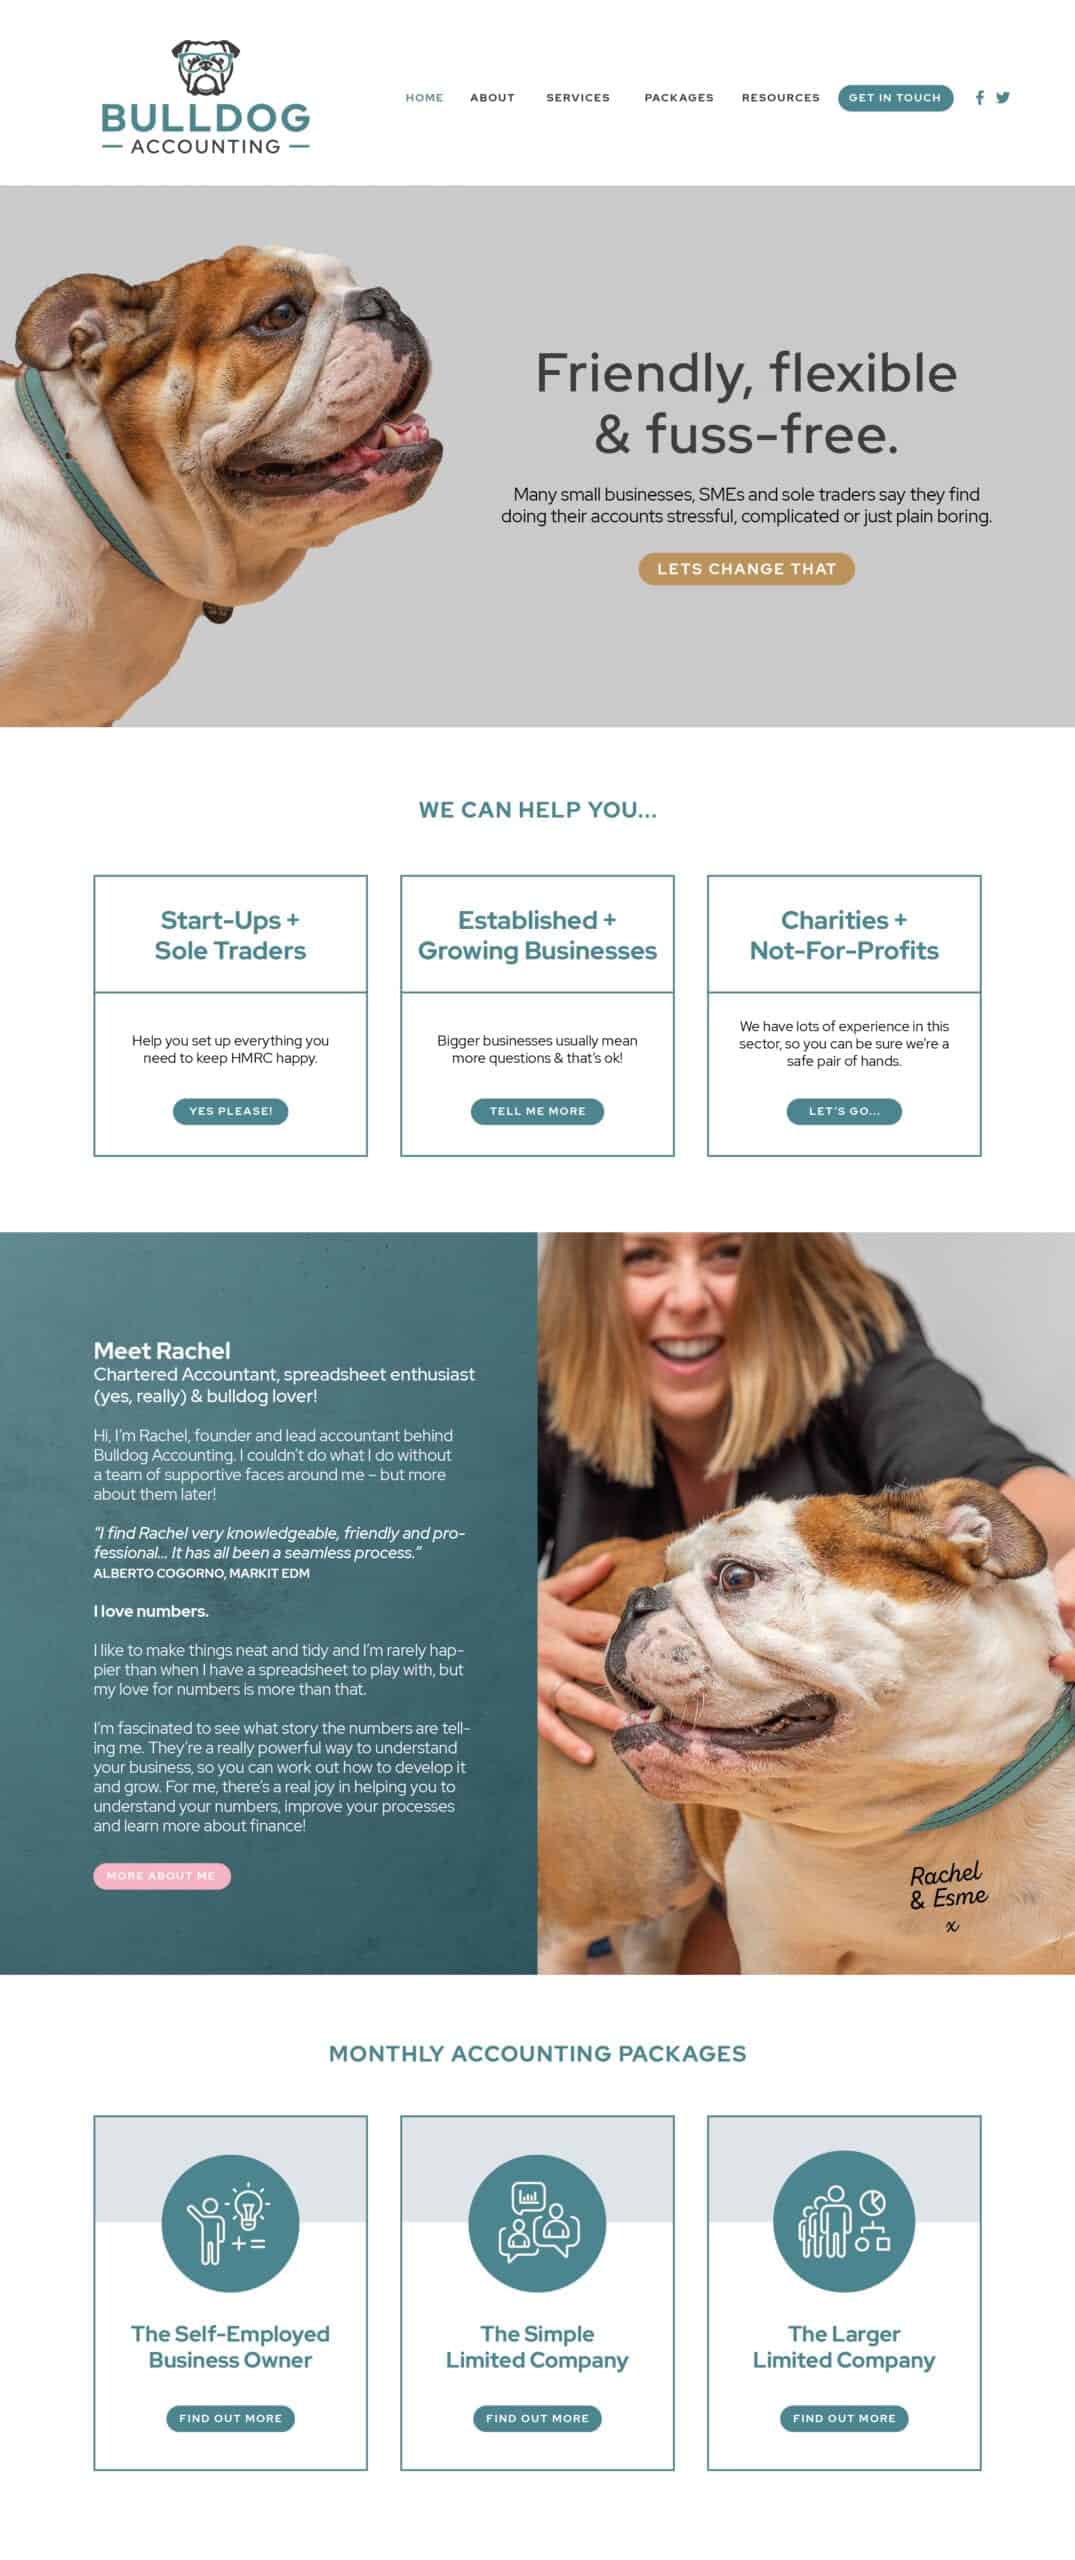 bulldog accounting website design layout journey